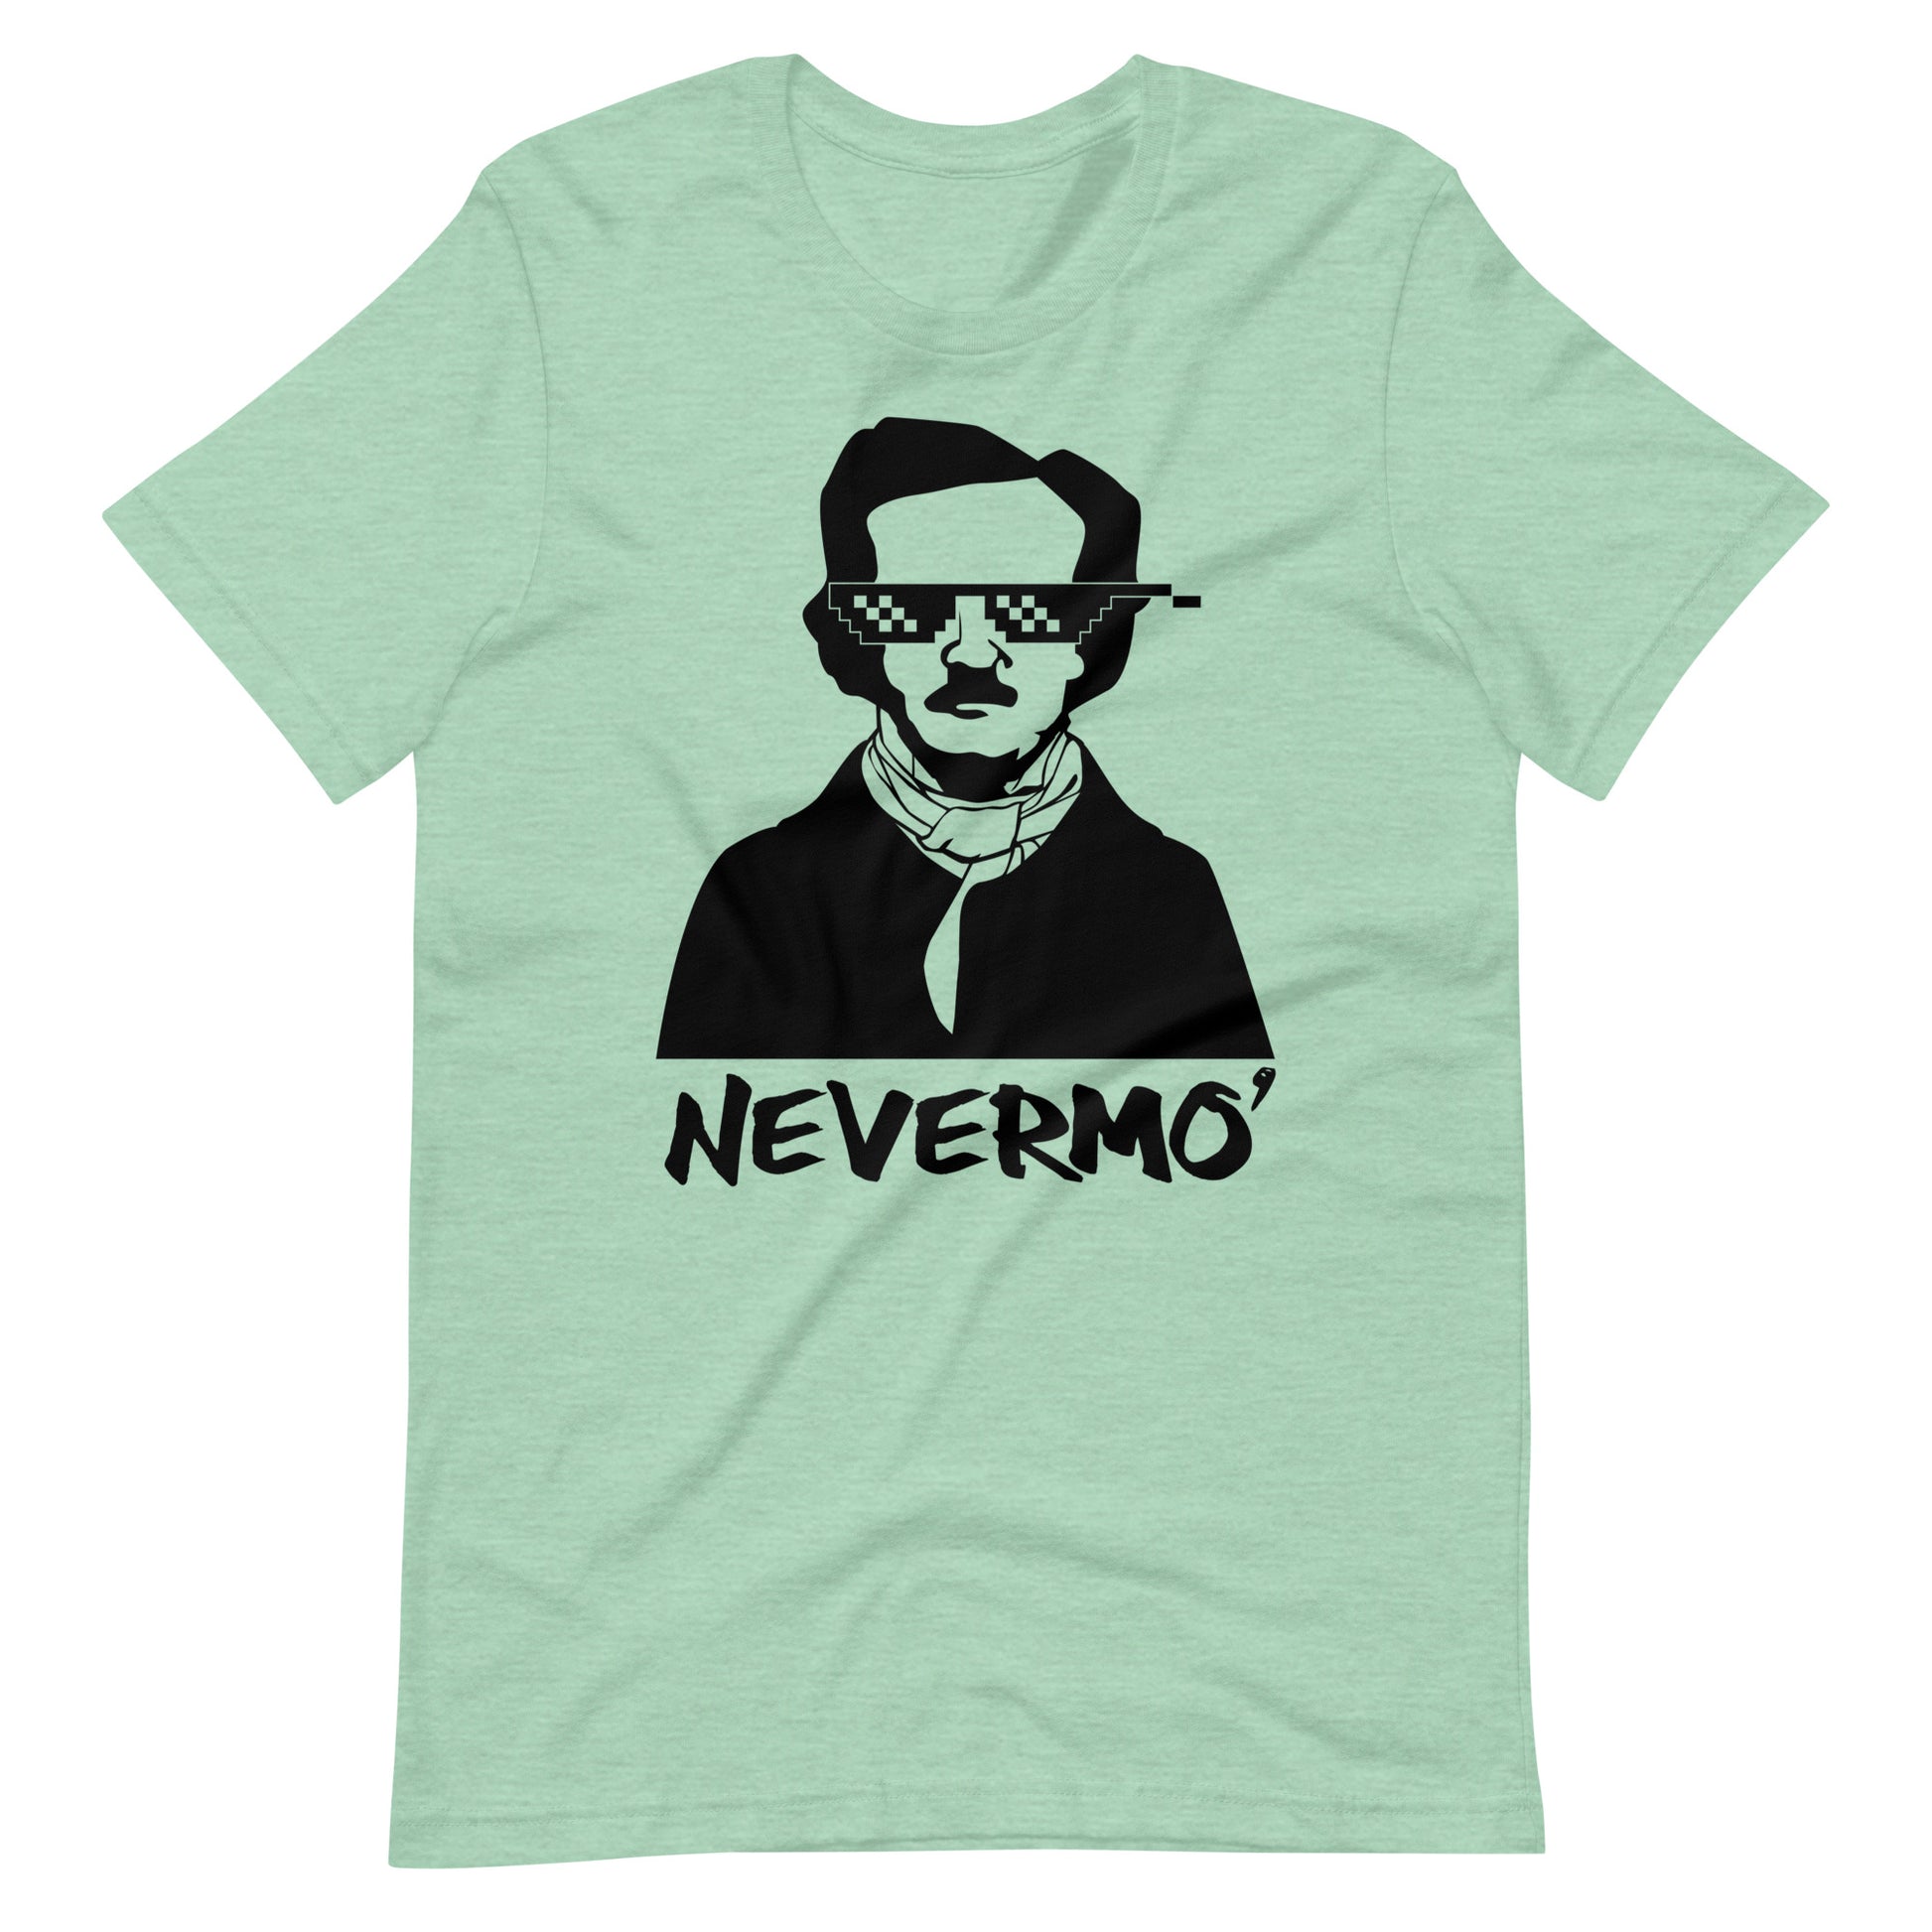 Women's Edgar Allan Poe "Nevermo" t-shirt - Heather Prism Mint Front